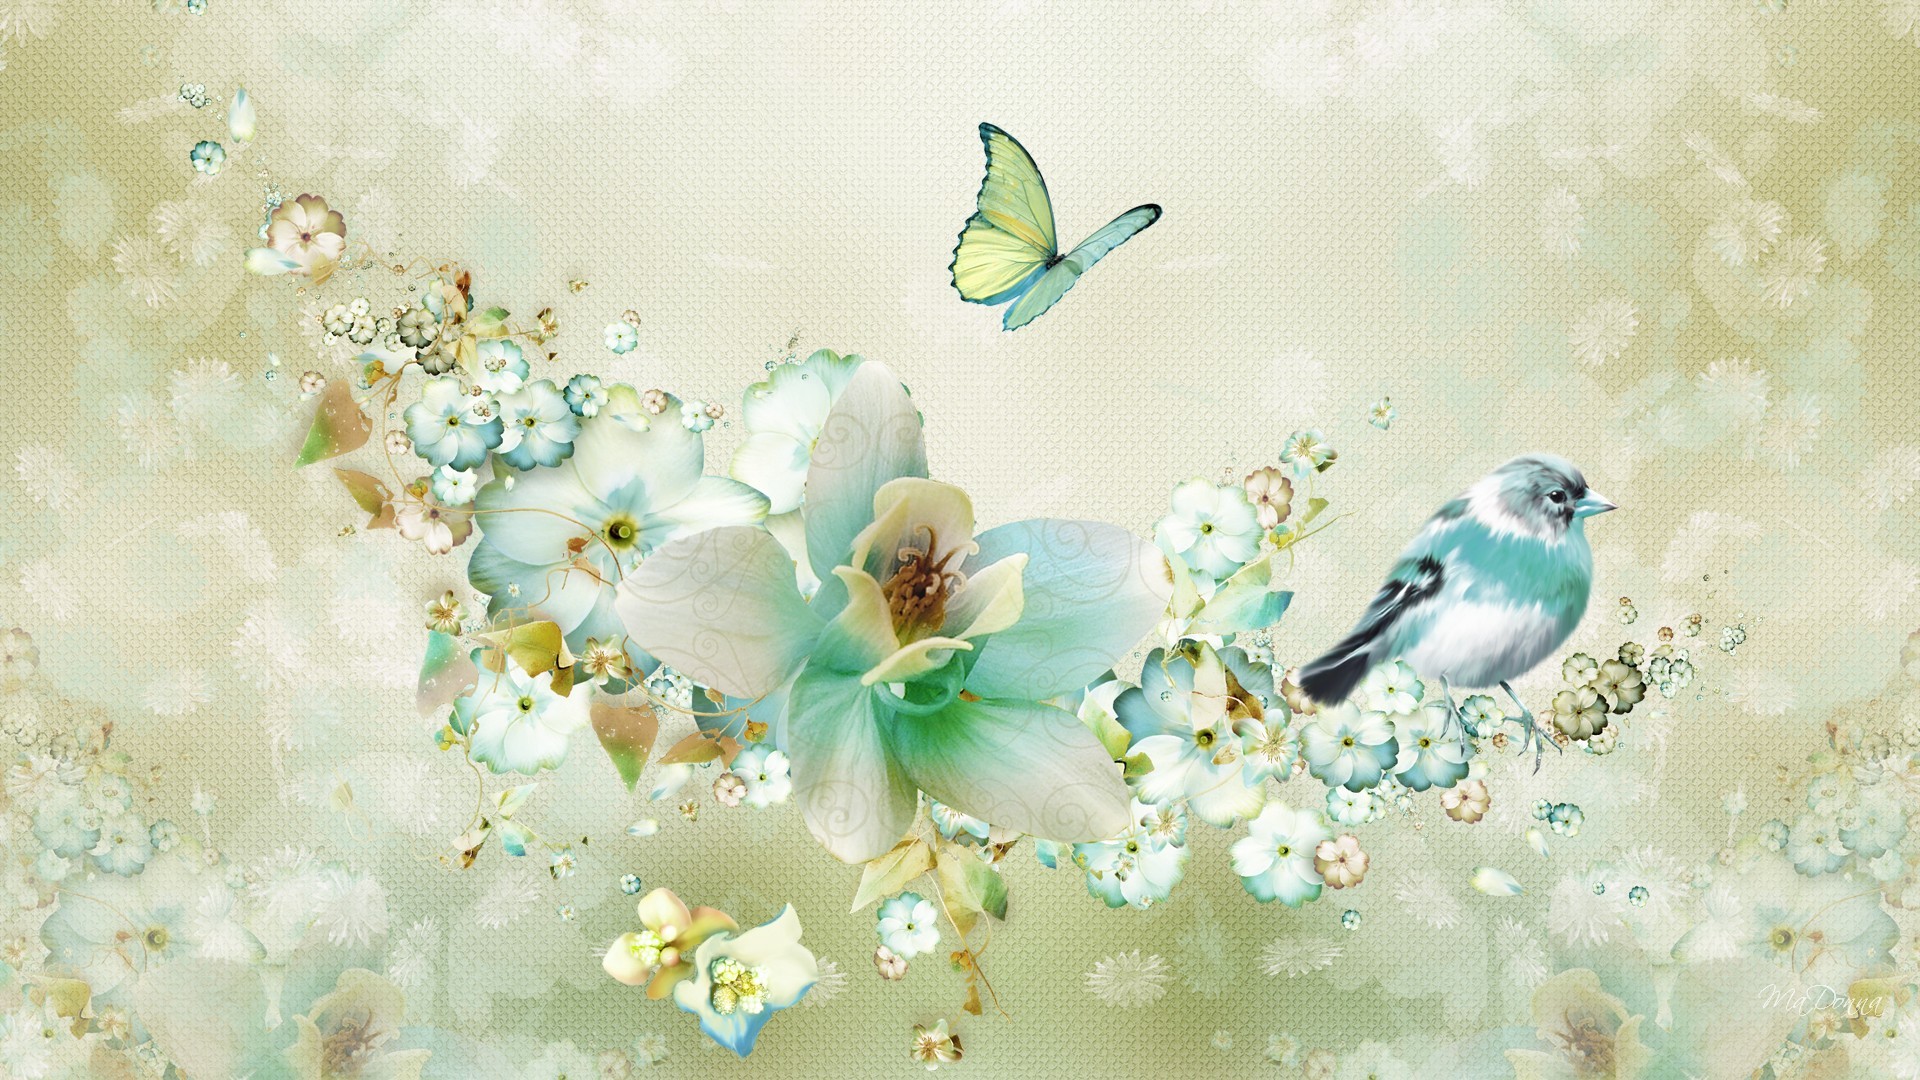 1920x1080 Flowers Birds and Butterfly wallpaper - ForWallpaper.com